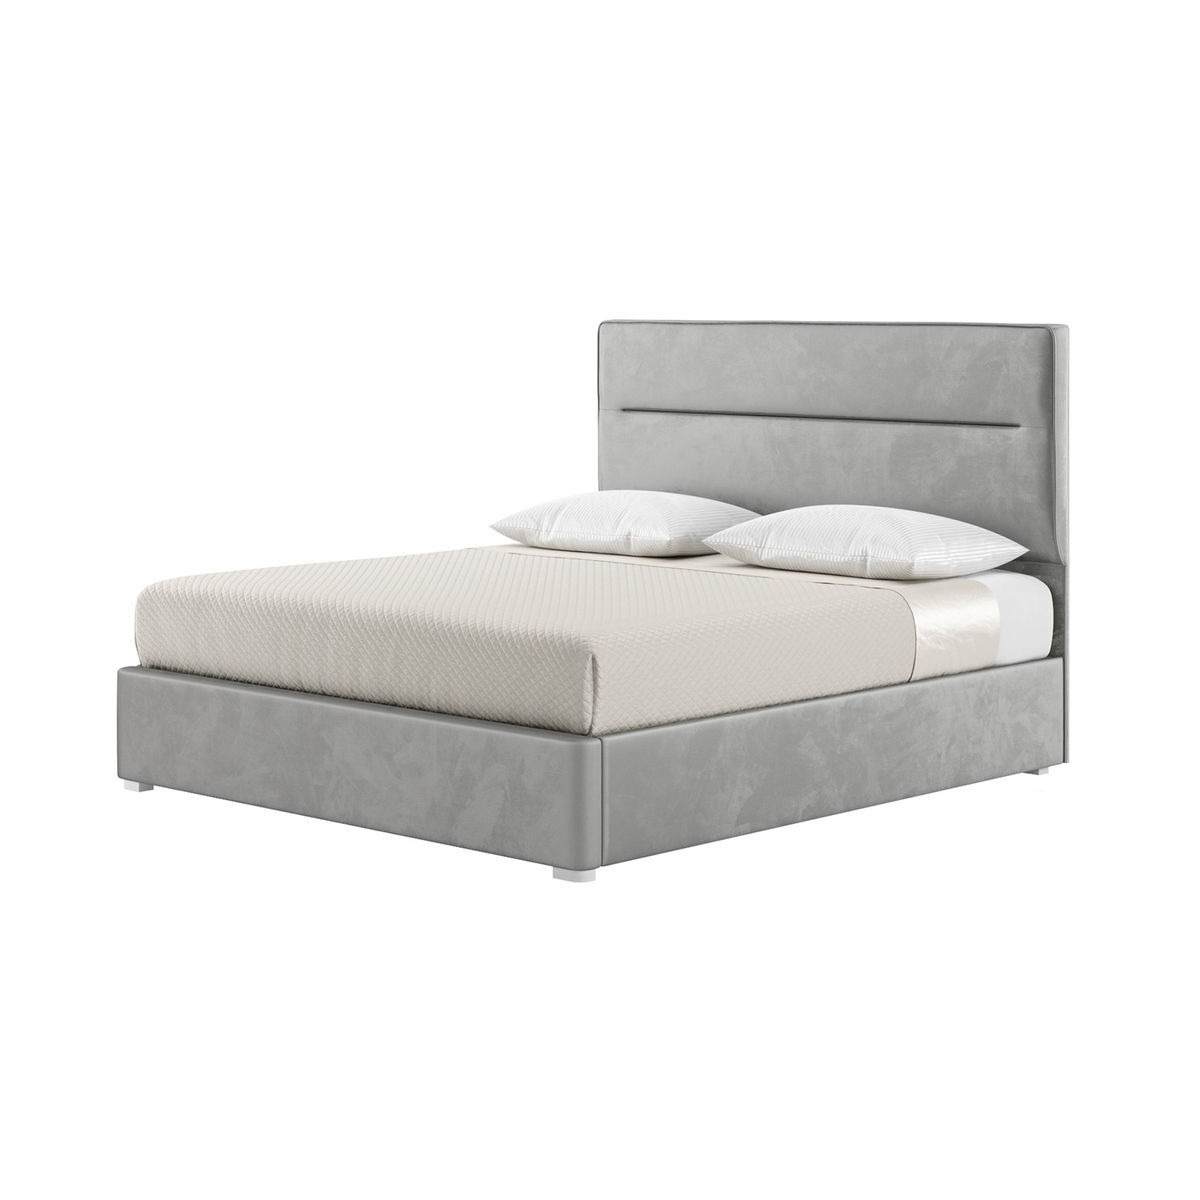 Lewis 6ft Super King Size Bed Modern Horizontal Stitch Headboard, silver, Leg colour: white - image 1